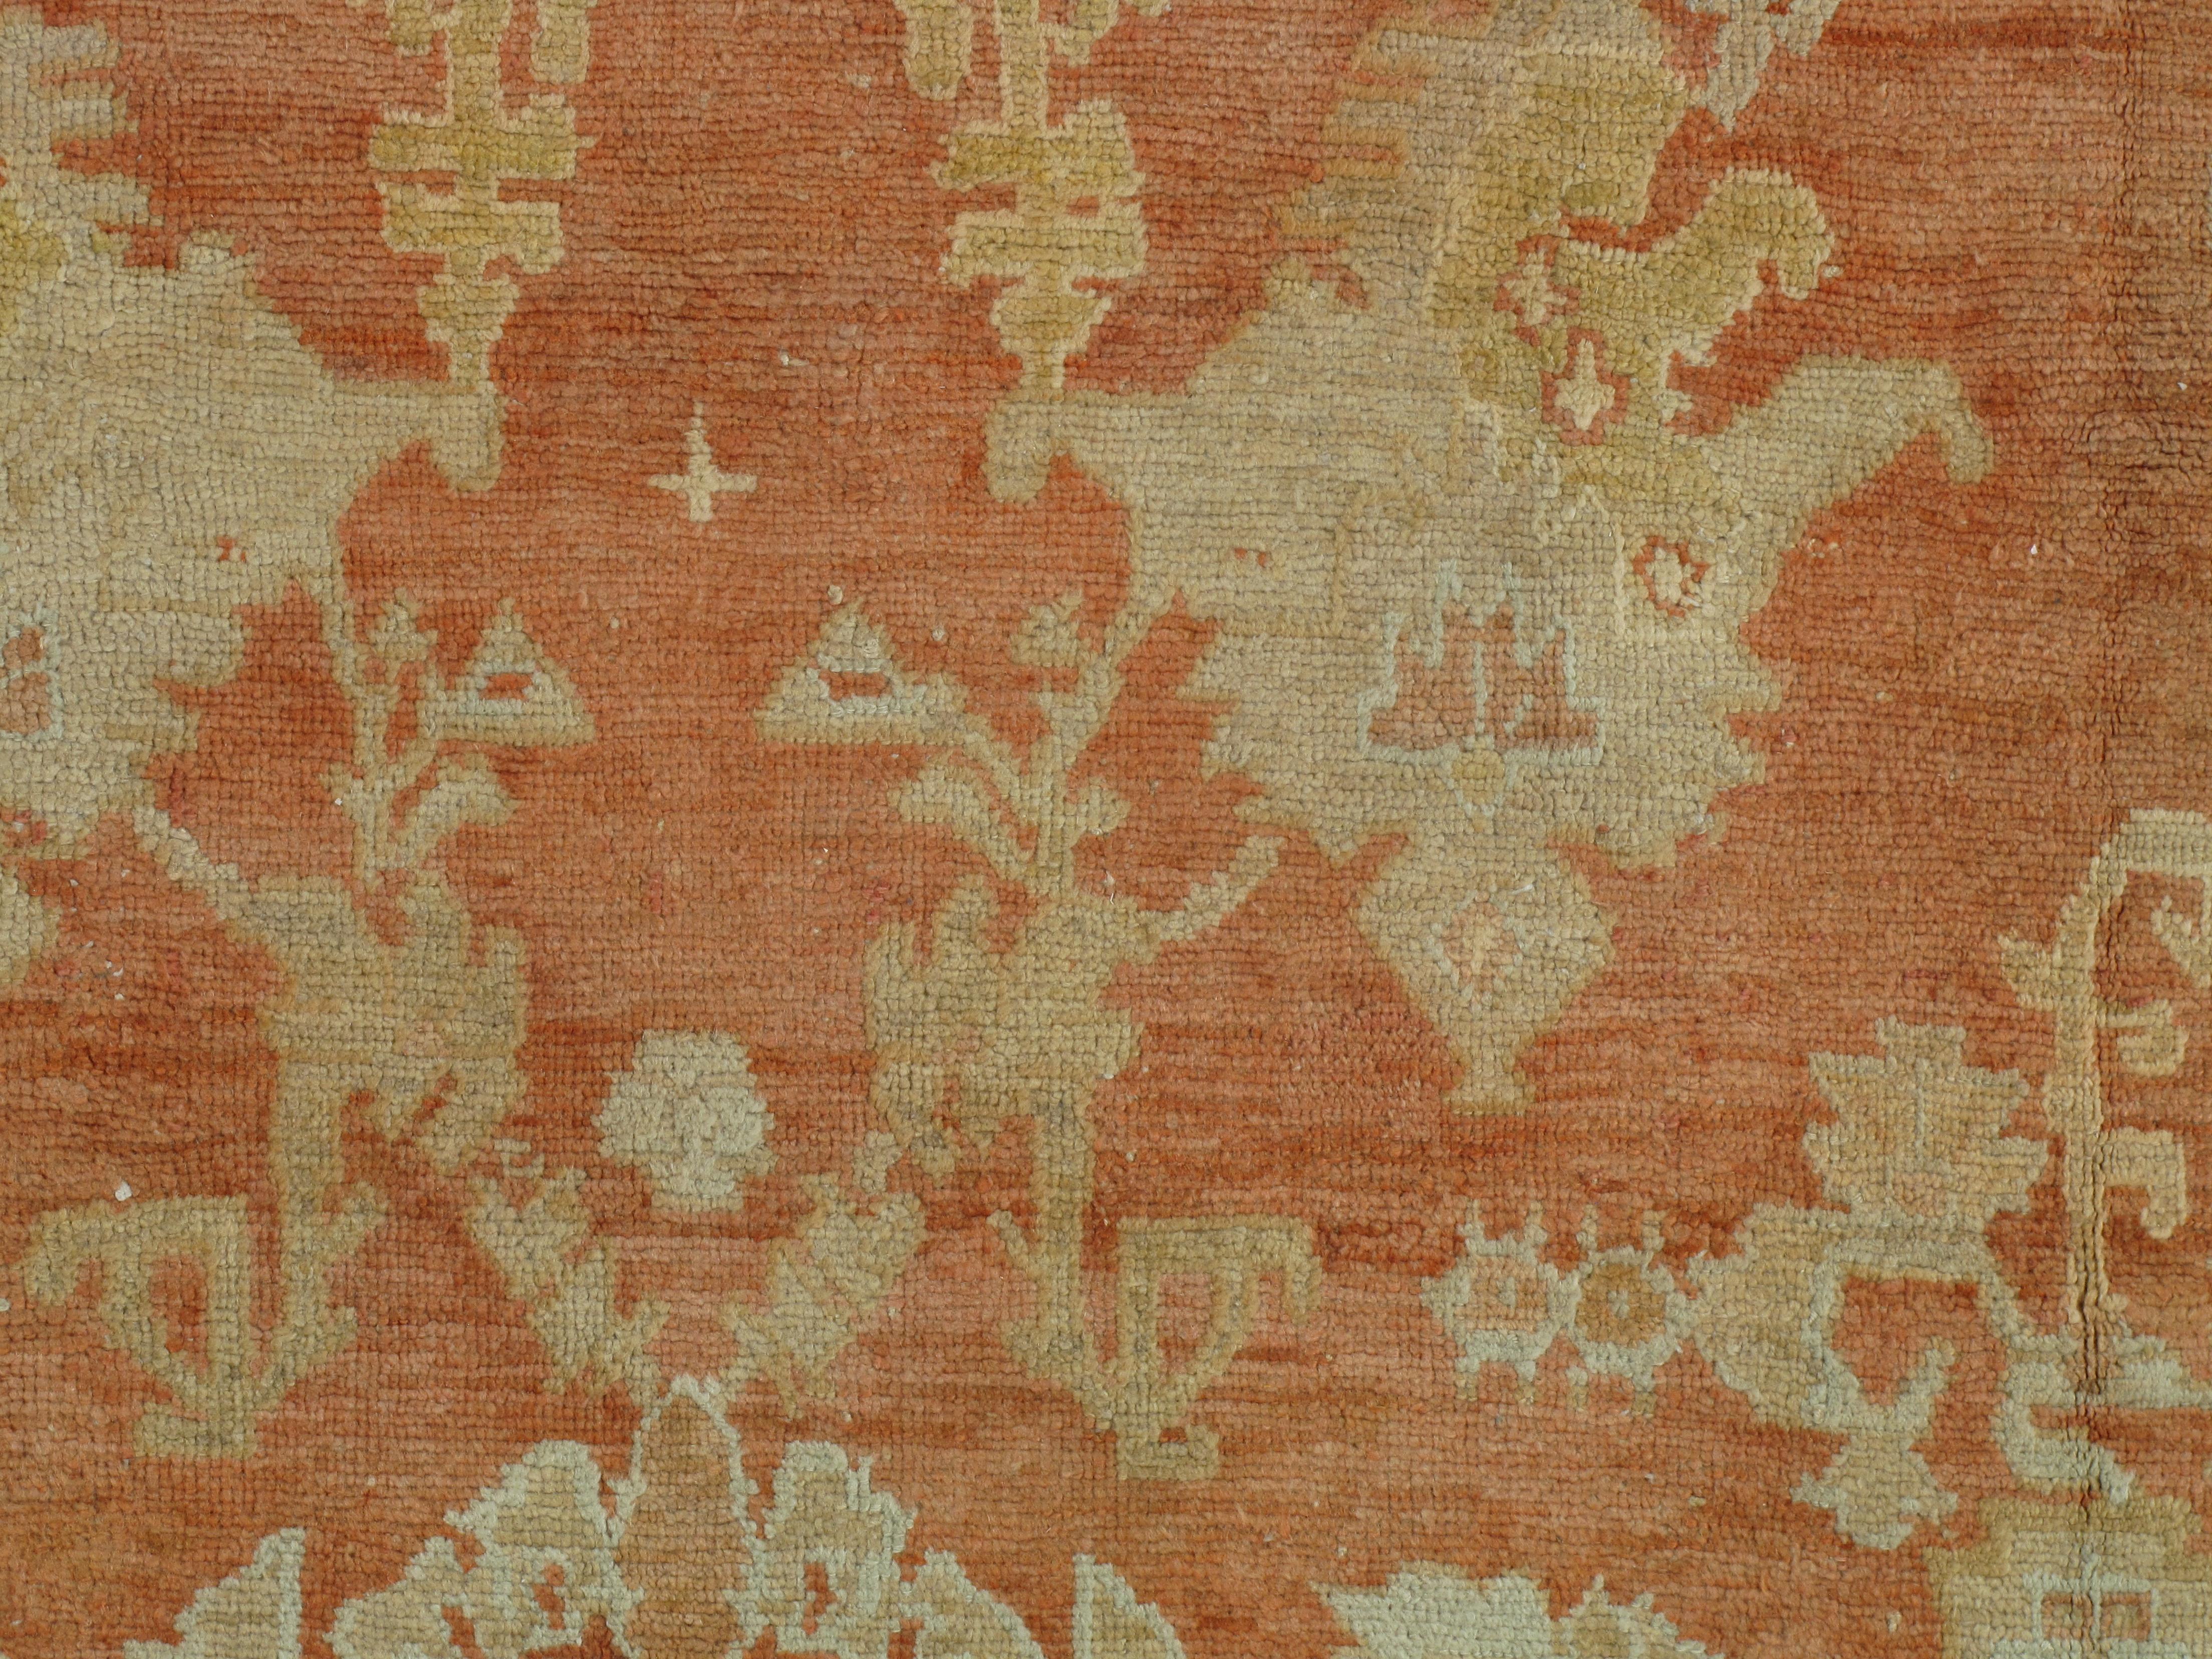 Antique Oushak Carpet, Handmade Oriental Rug, Coral Field, Gold, Ivory Border For Sale 1